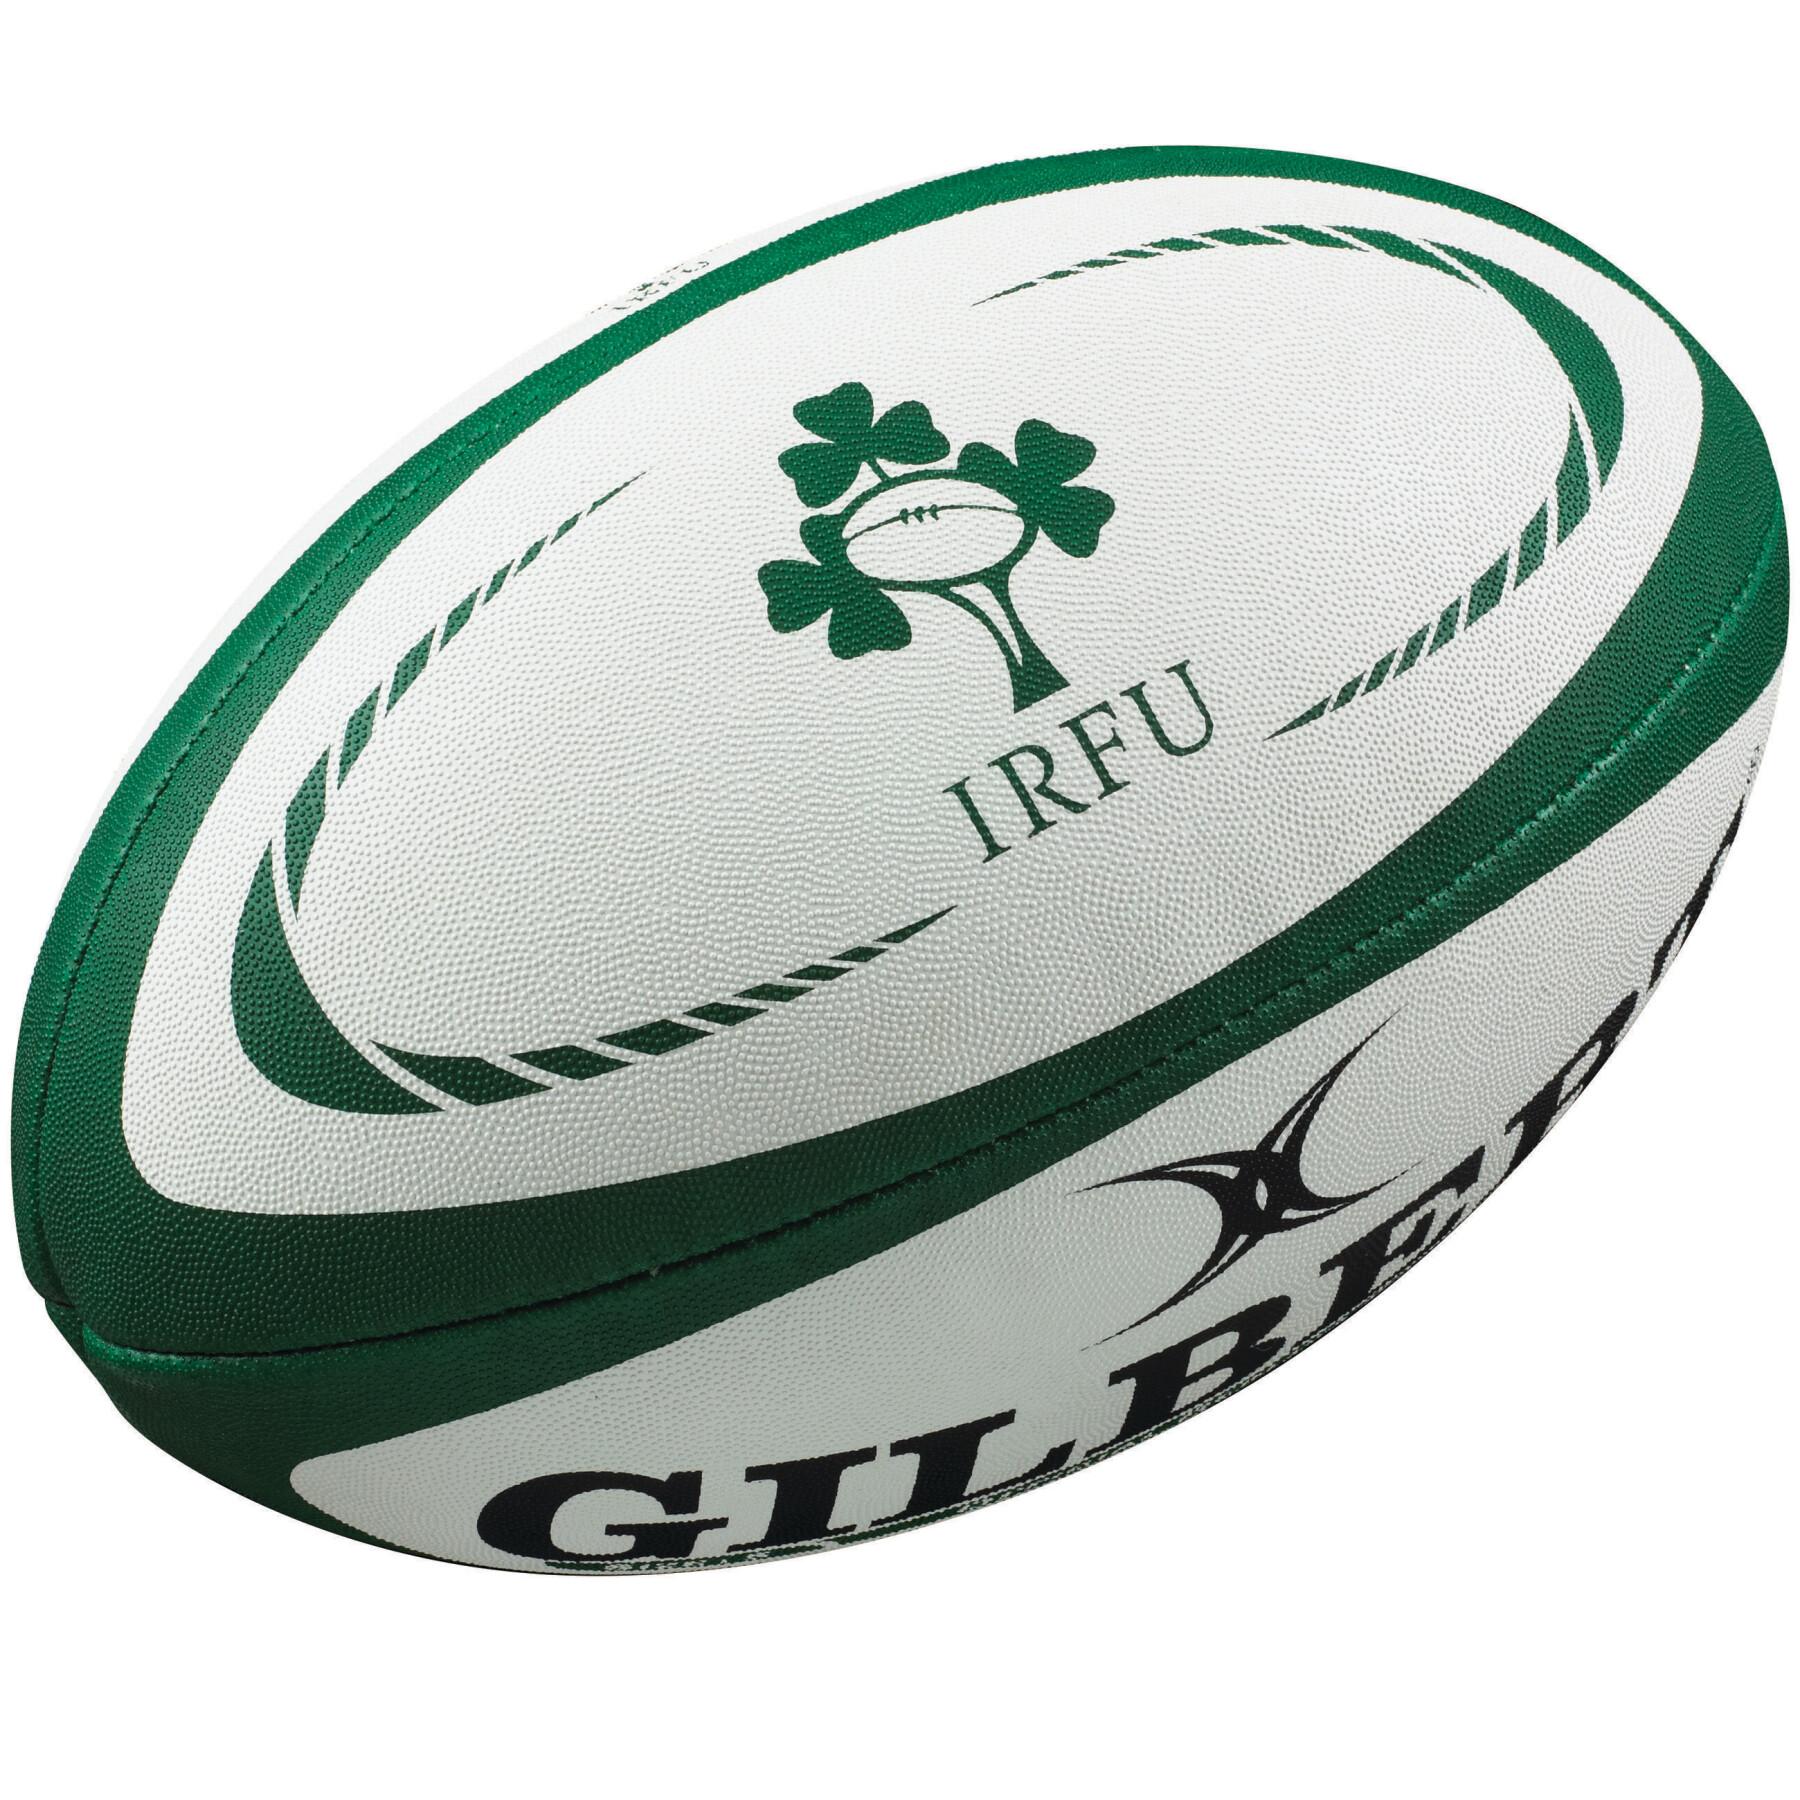 Set of 5 Rugby balls Irlande